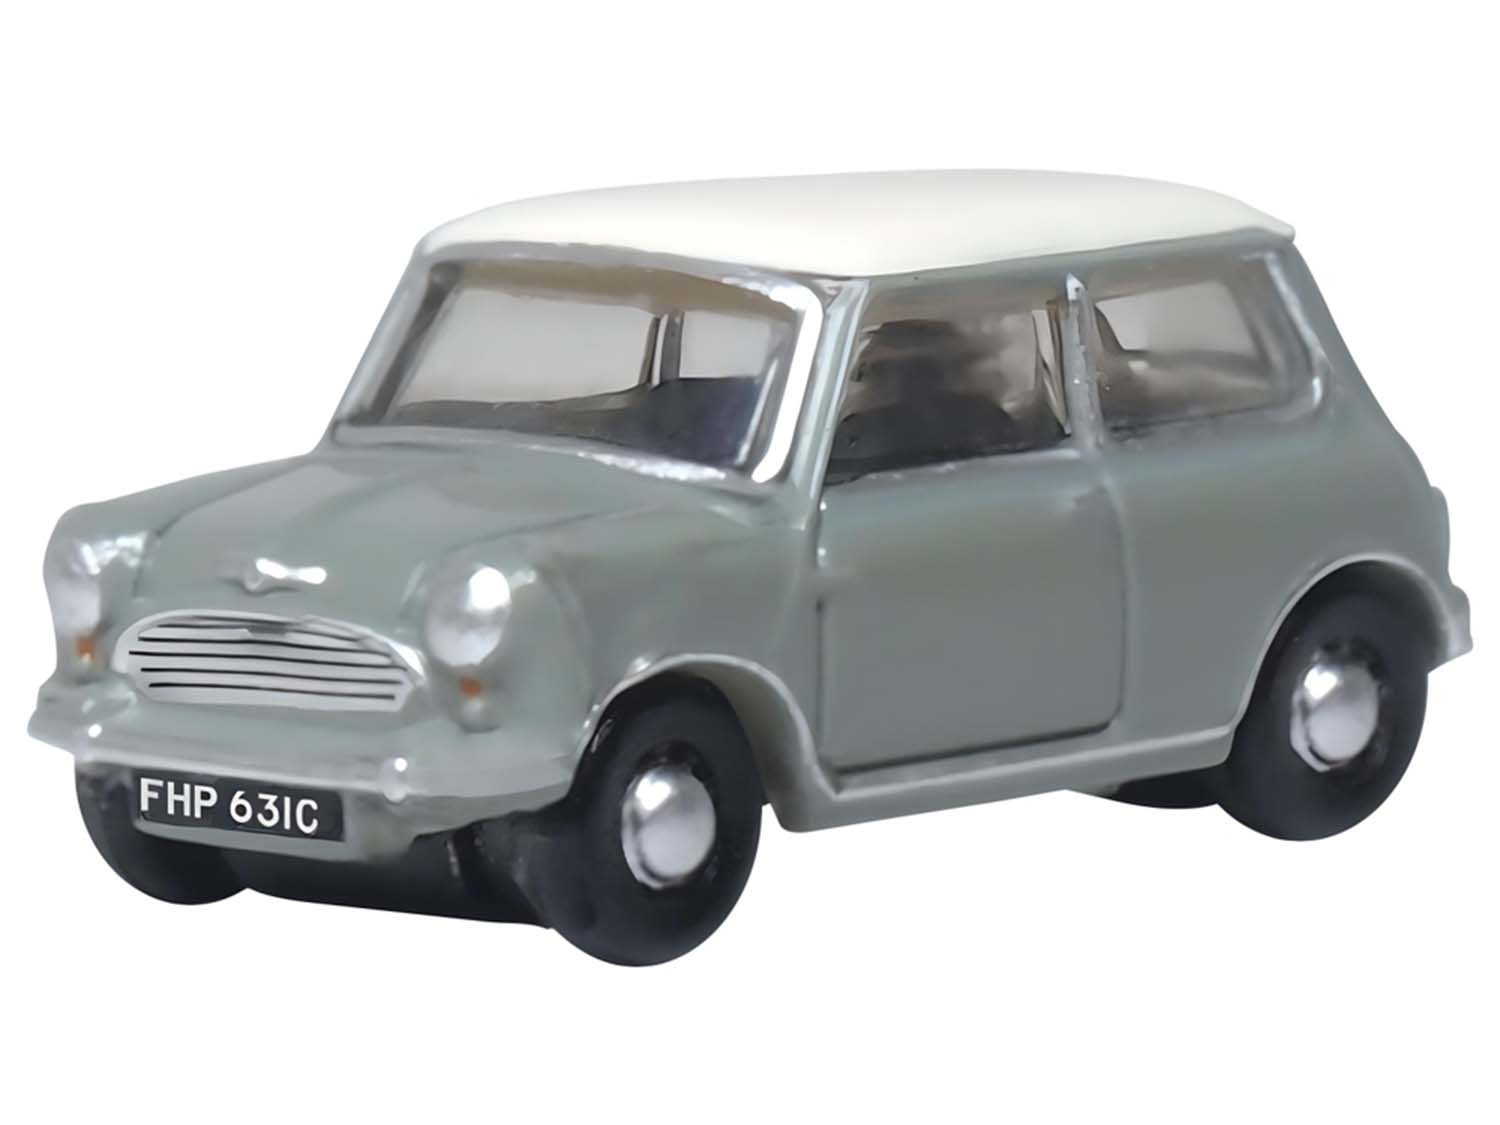 Oxford Diecast N Gauge Classic Mini Tweed Grey/Old Engish White Nmn009